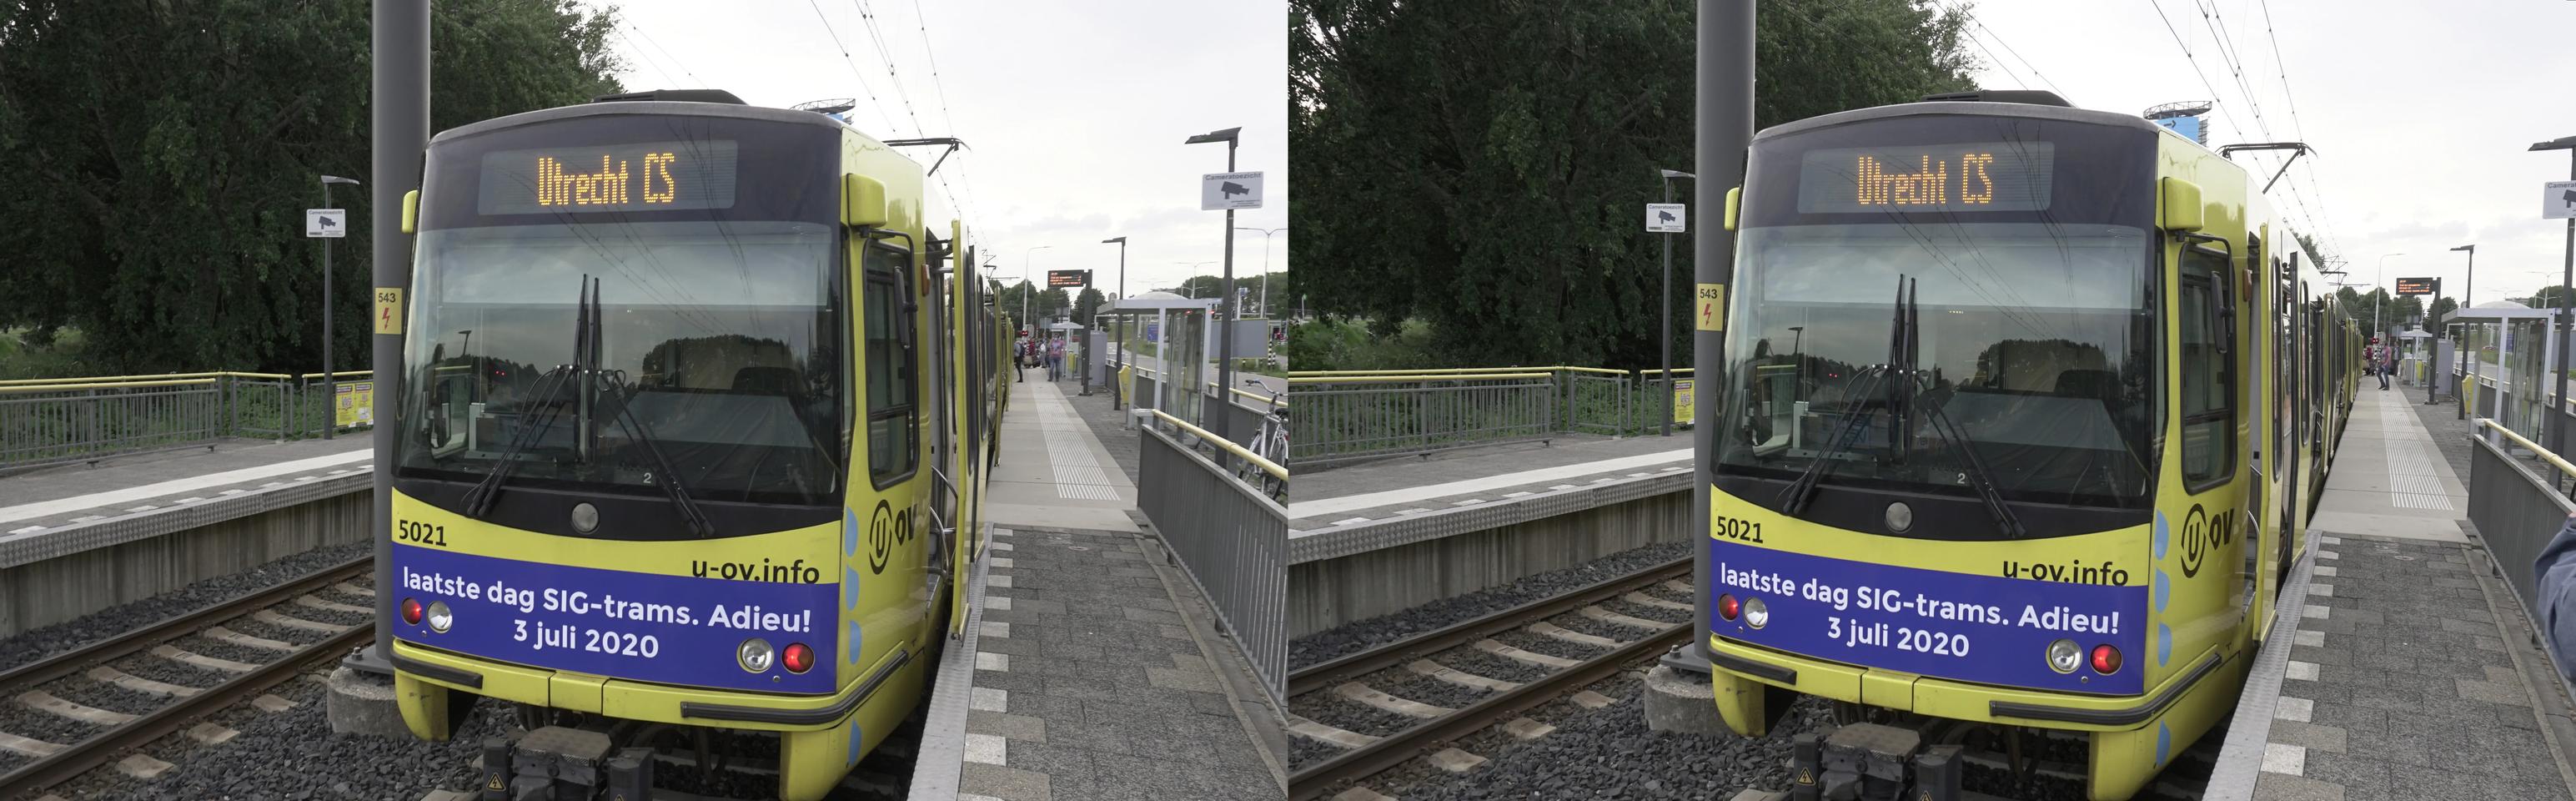 SIG Tram at transferium Westraven P+R Utrecht, July 3rd 2020